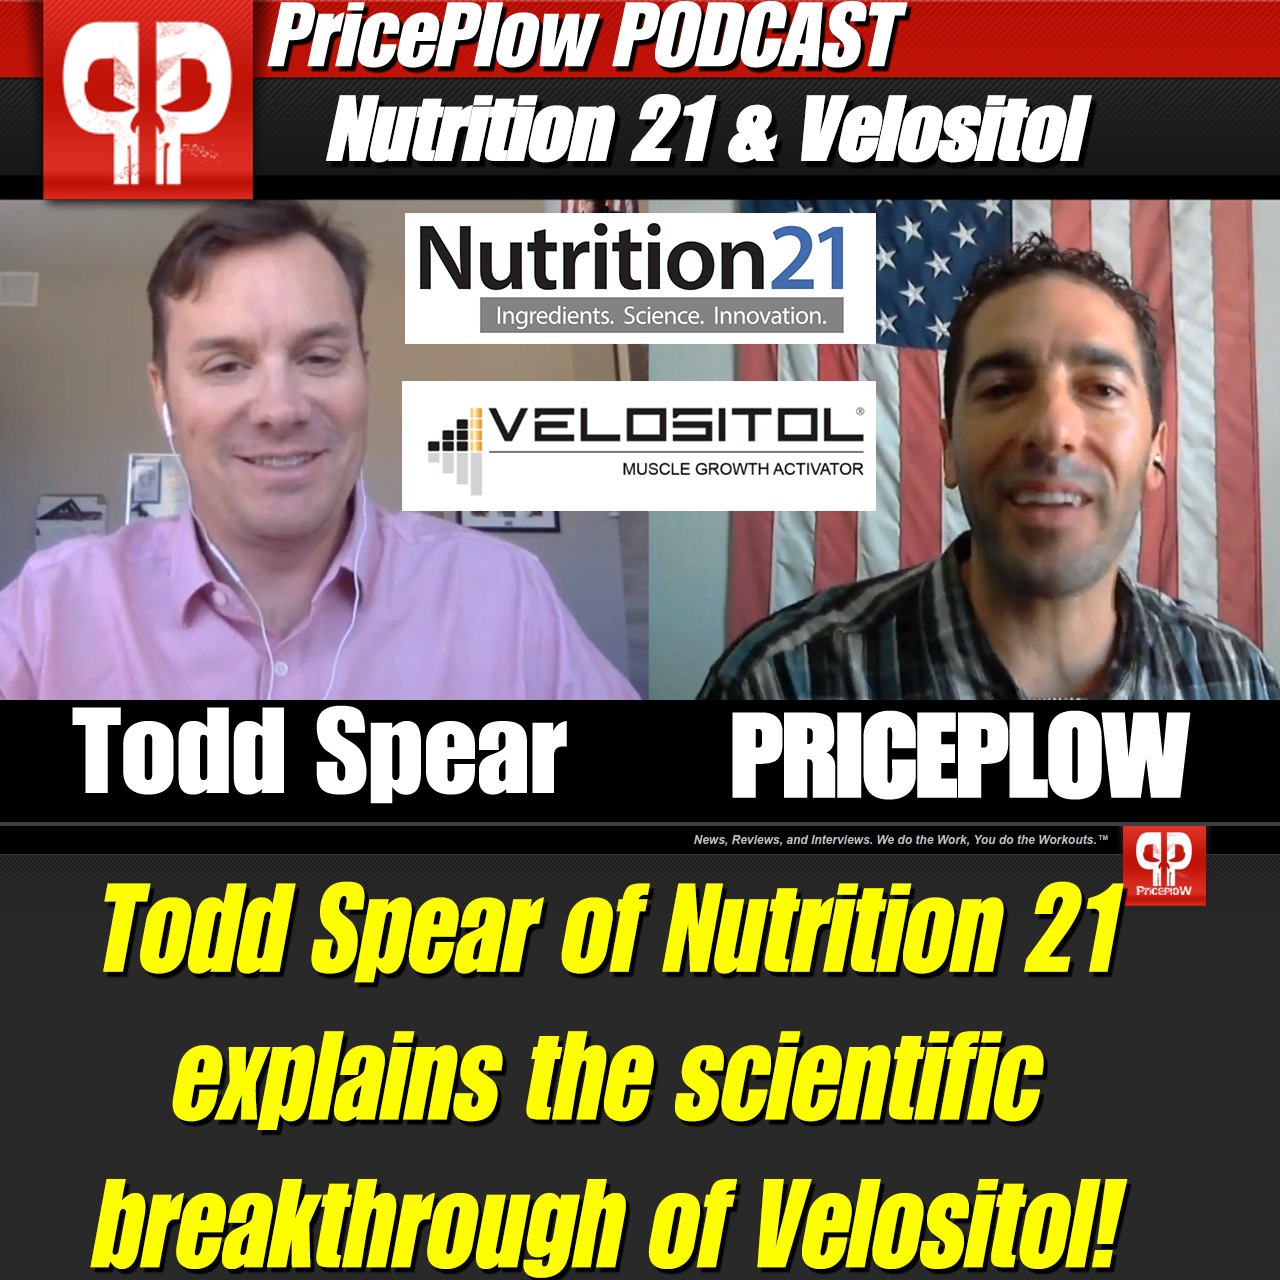 Velositol Todd Spear Nutrition 21